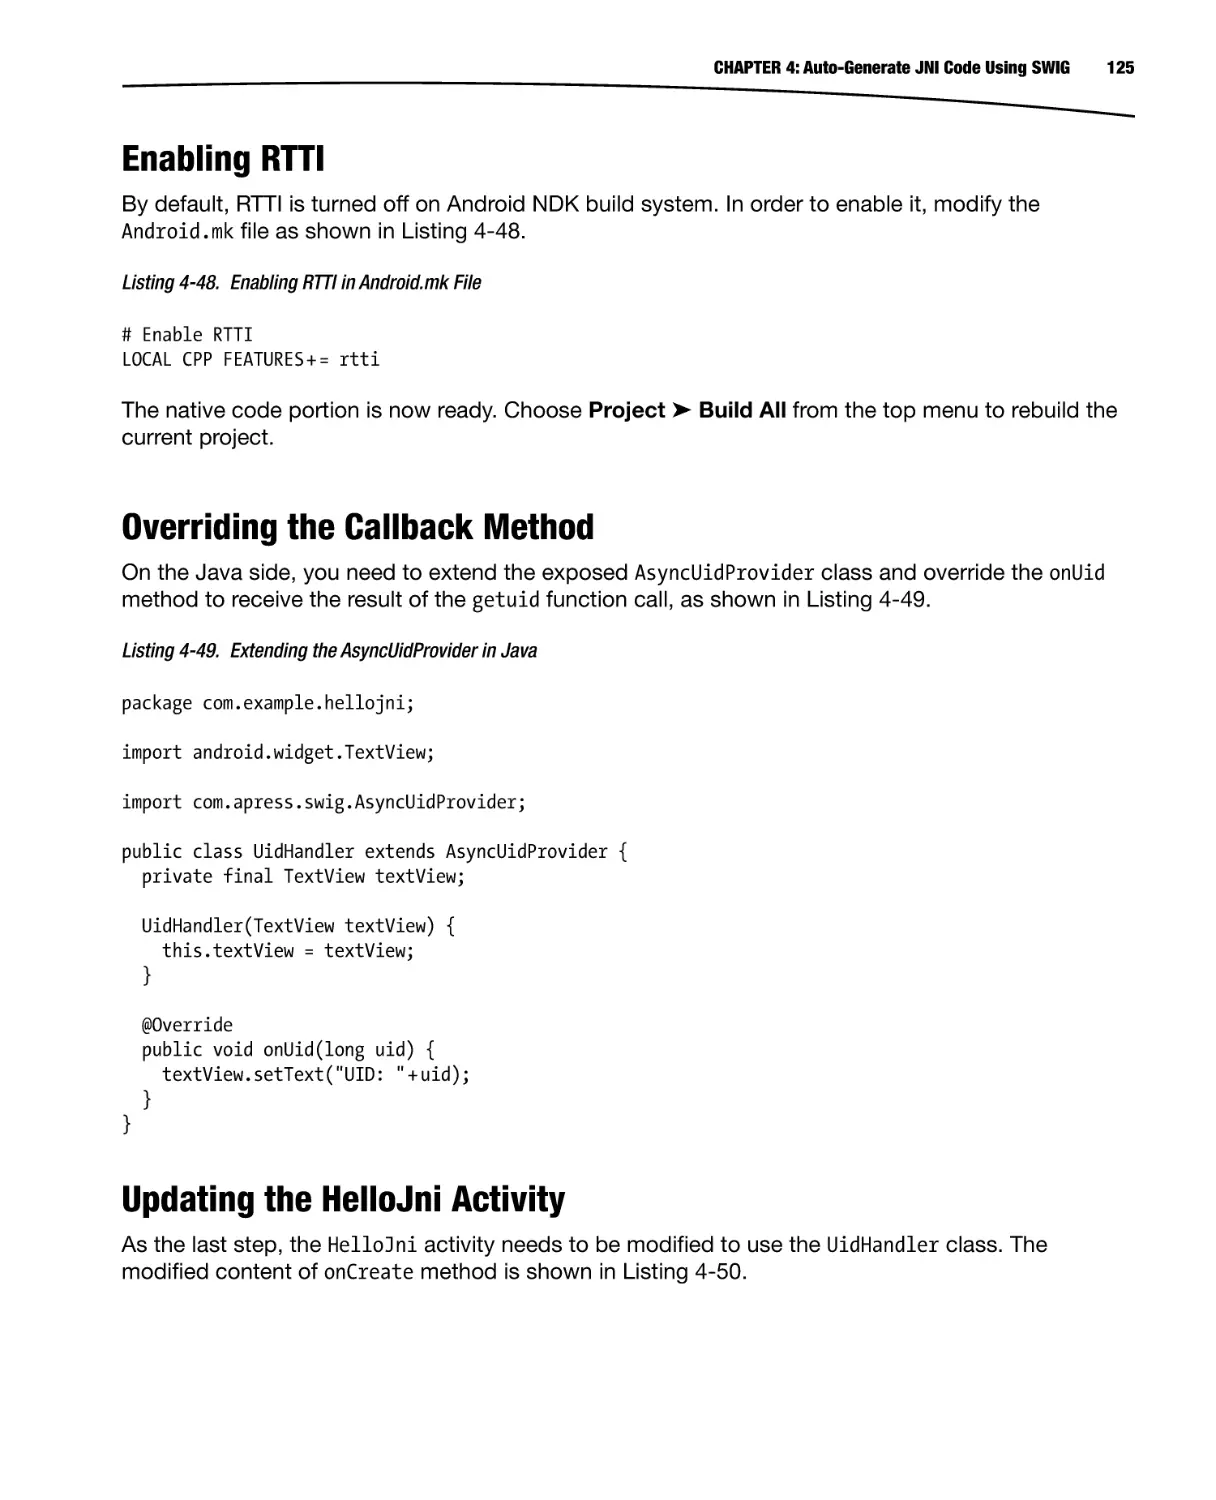 Enabling RTTI
Overriding the Callback Method
Updating the HelloJni Activity